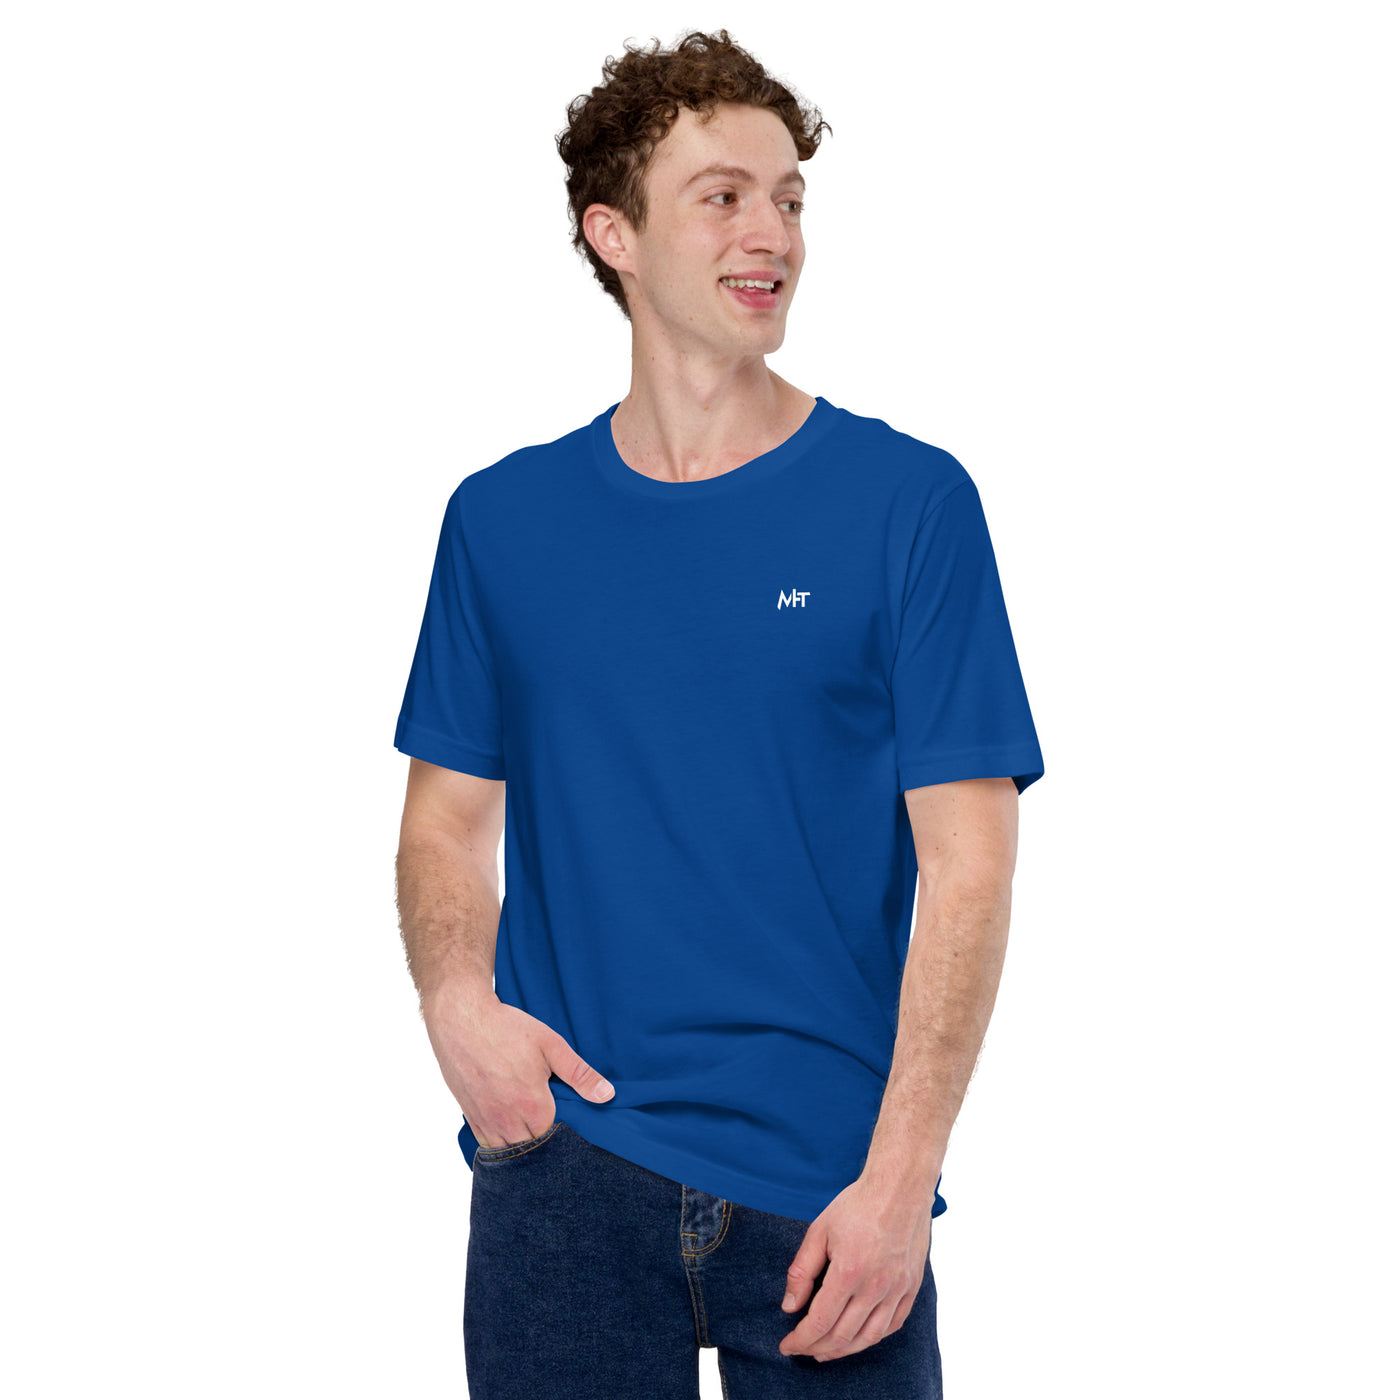 Player One - Unisex t-shirt ( Back Print )